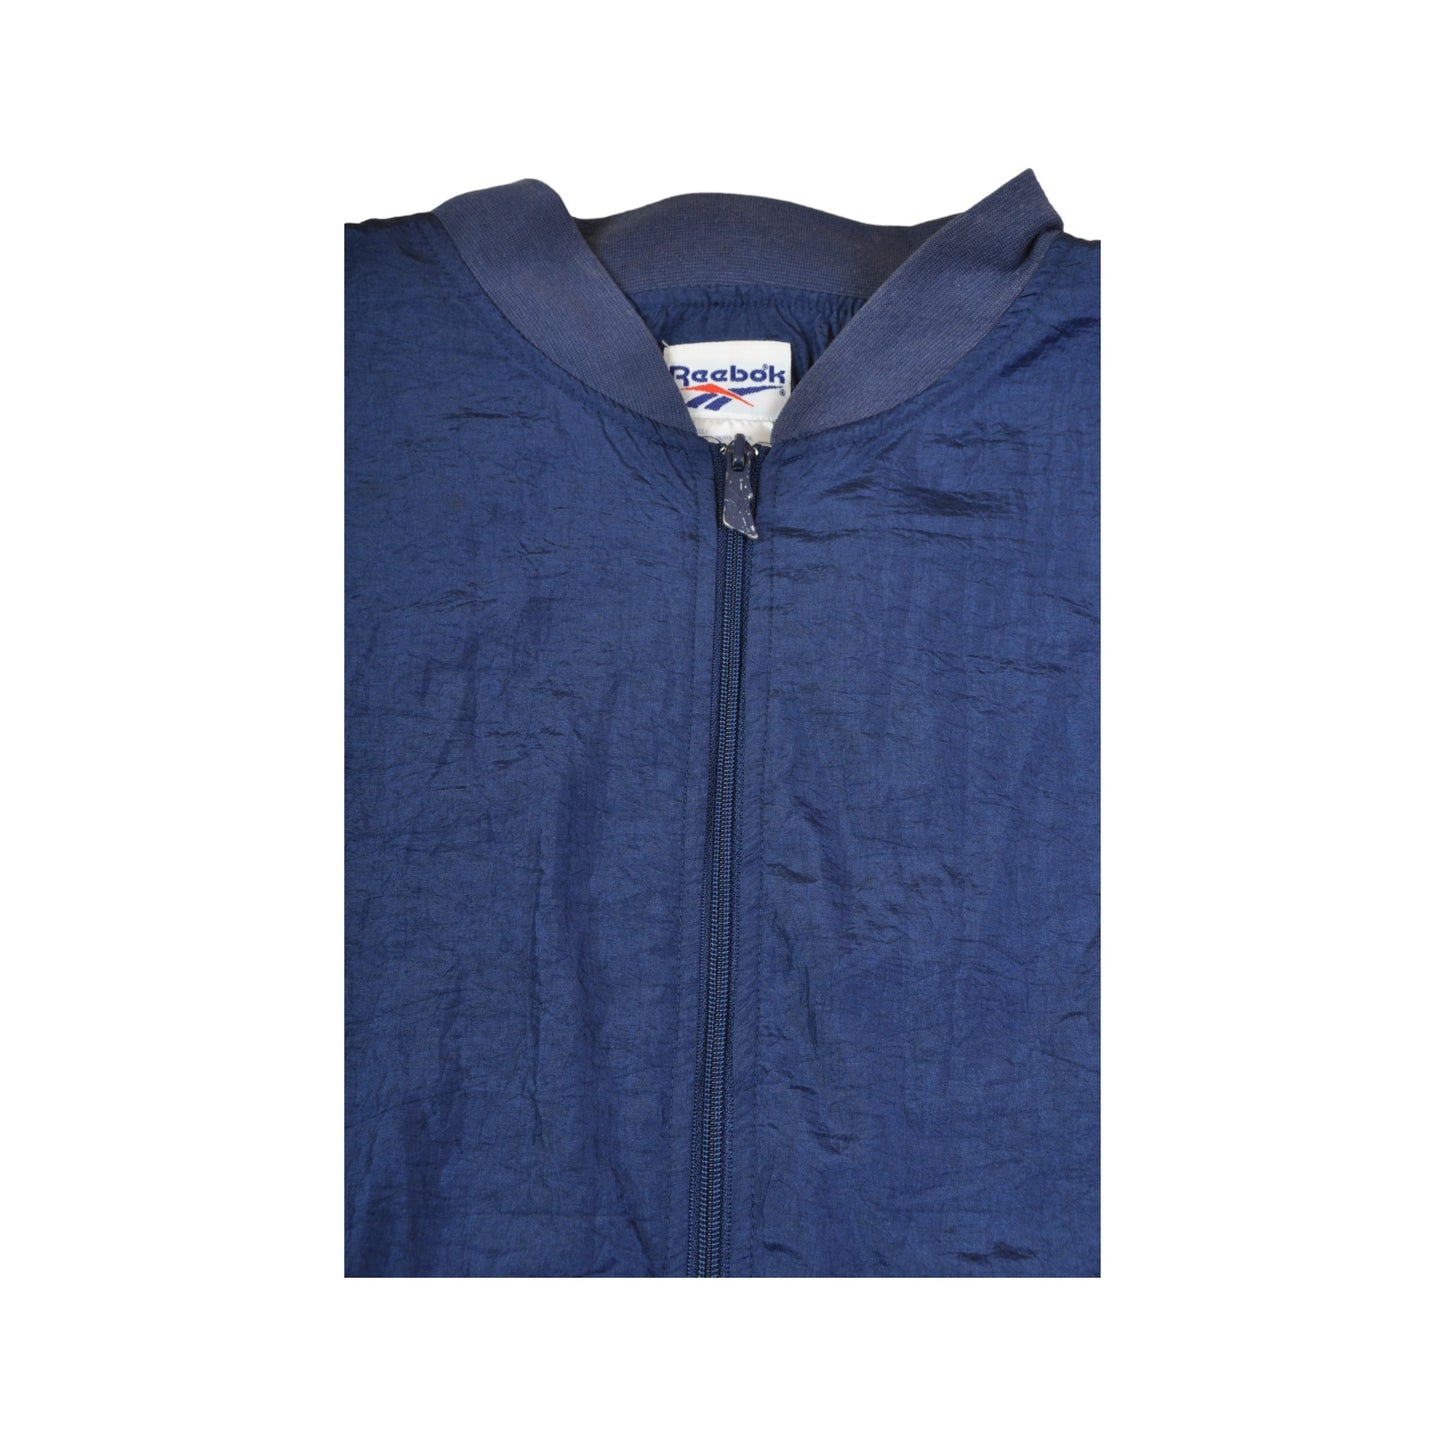 Vintage Reebok Windbreaker Jacket Blue Large